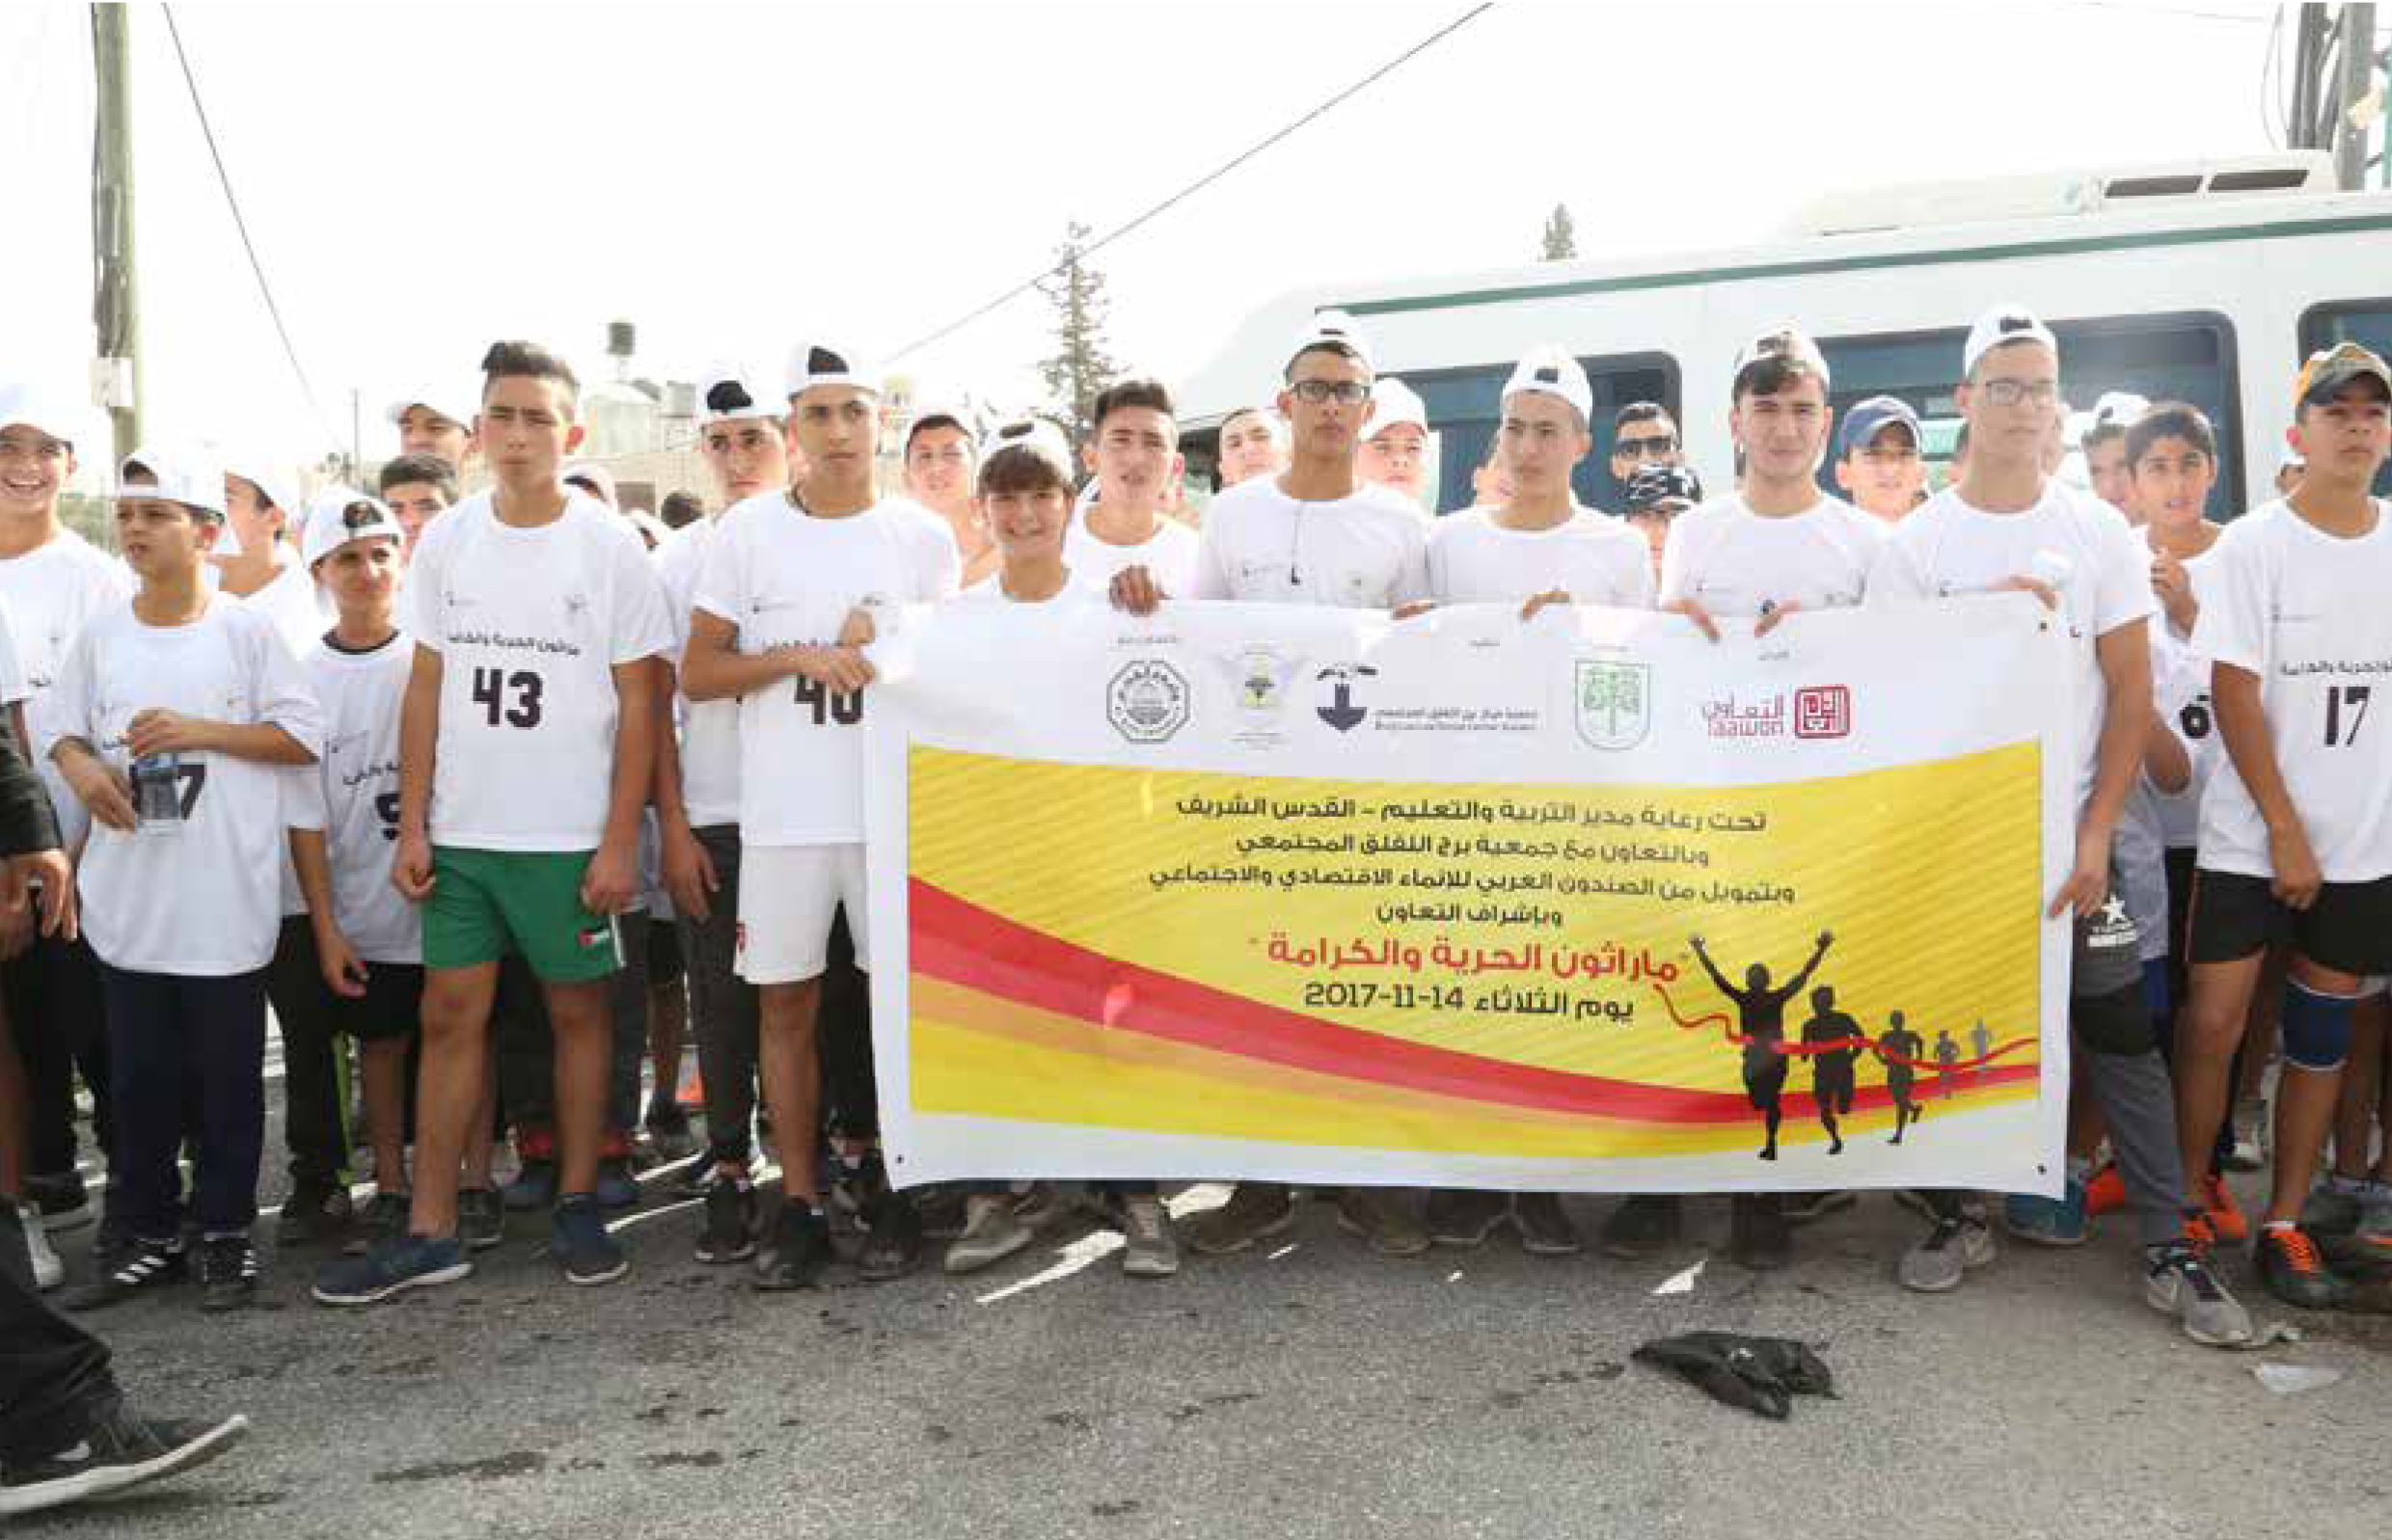 Burj Al-Luqluq, the Ministry of Education & Al-Quds University Organize the Freedom Marathon for School Students